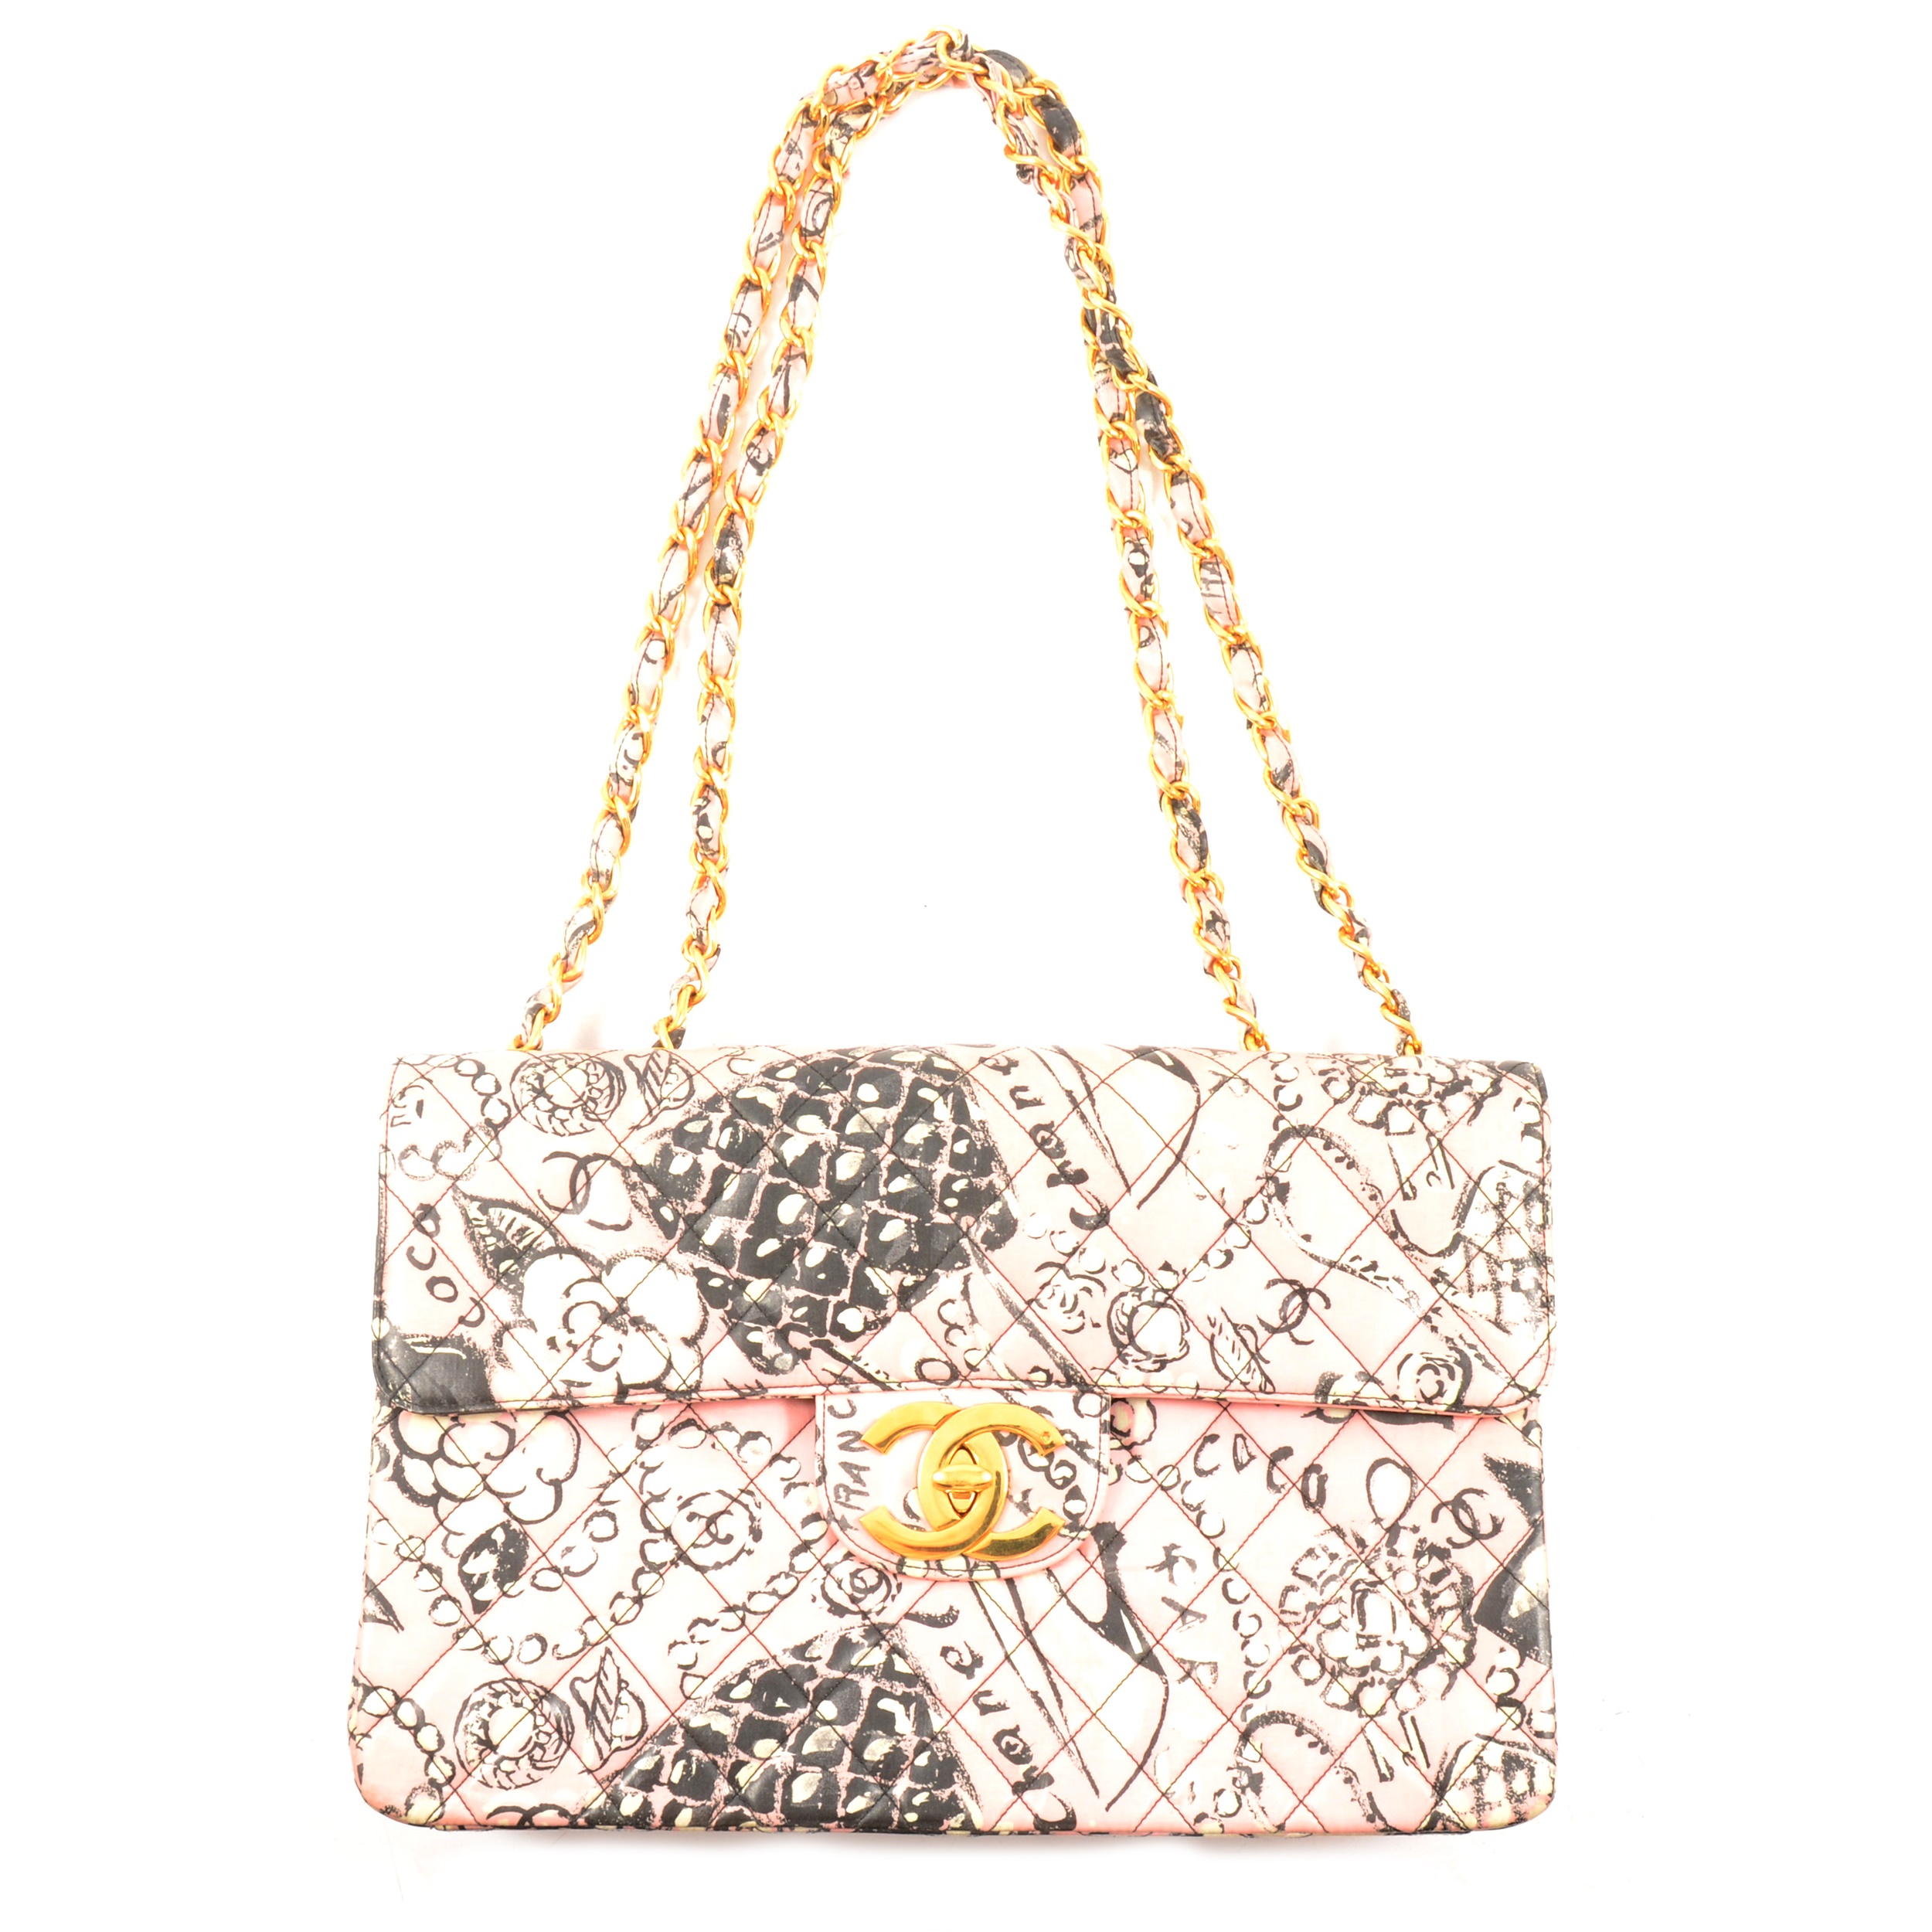 Lot 433 - Chanel - a Limited Edition Coco handbag.